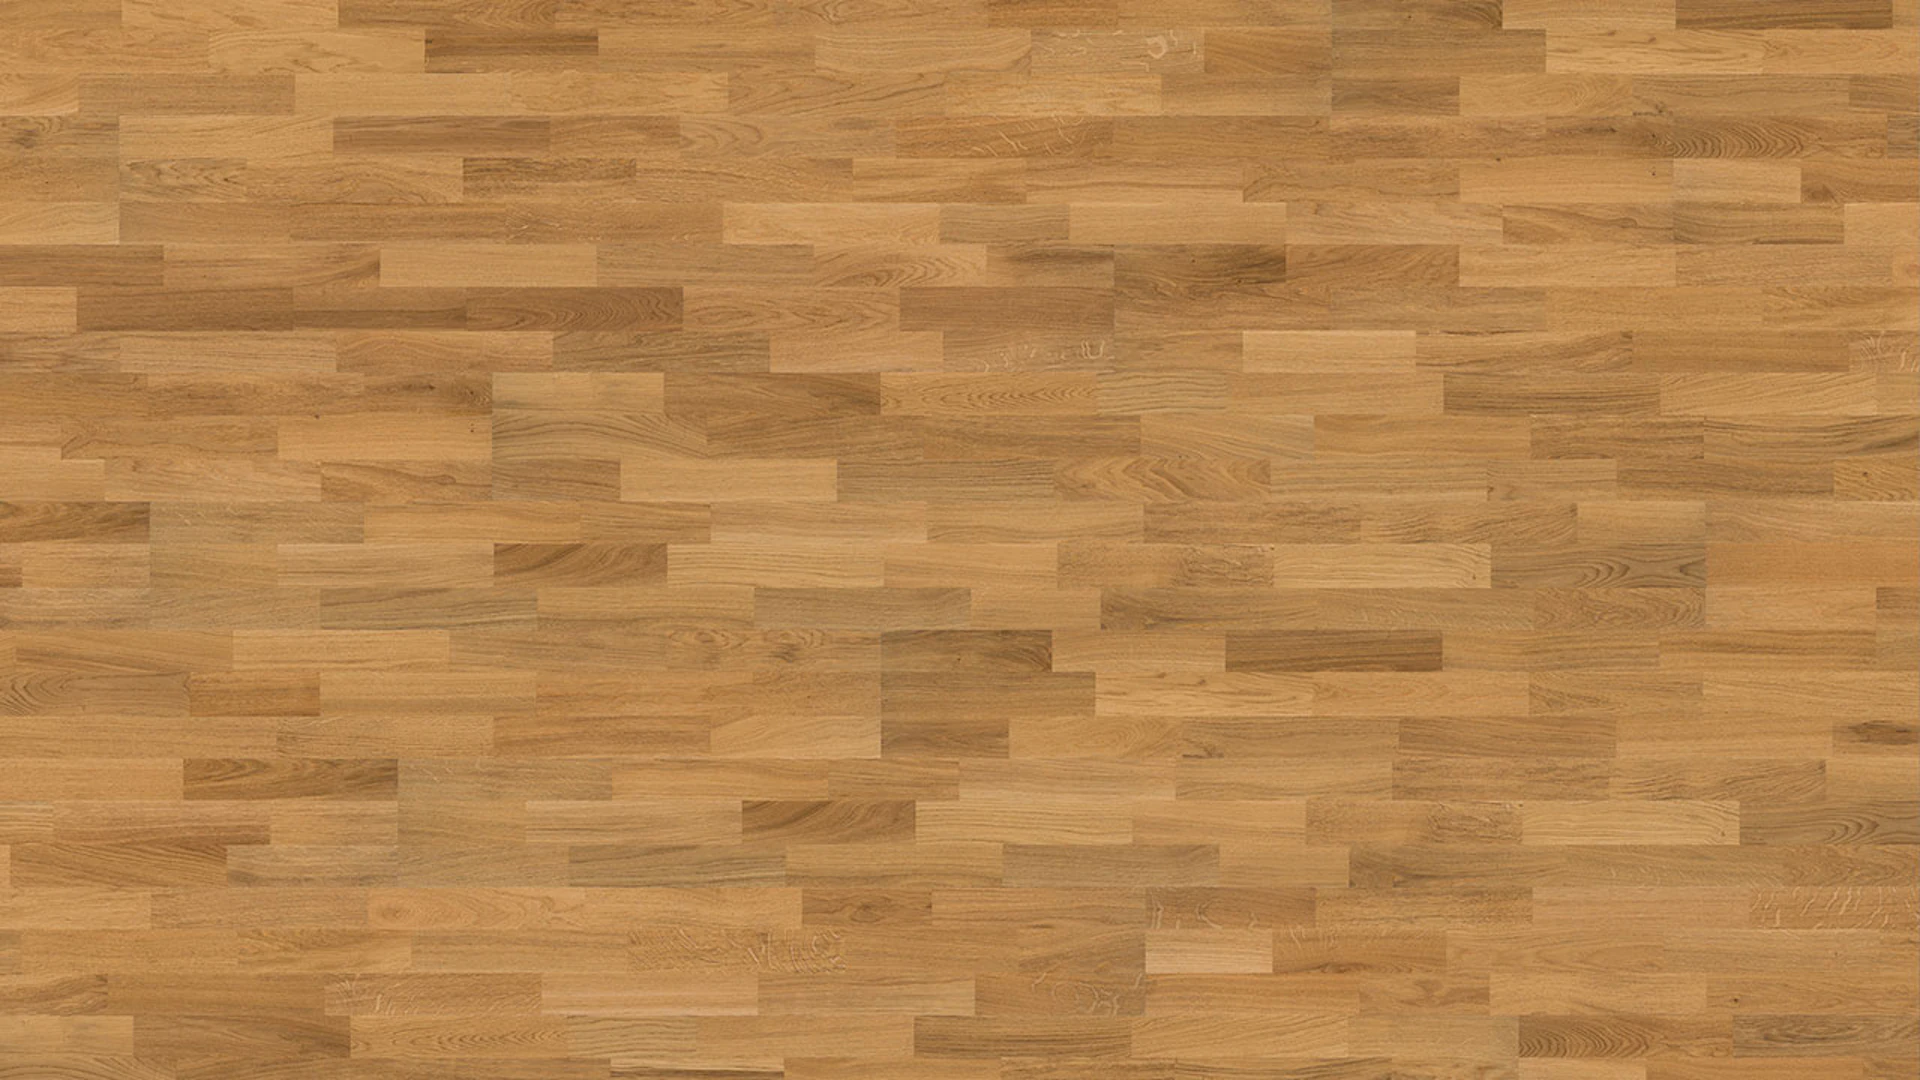 Kährs Parquet Flooring - European Naturals Collection Siena Oak (153N38EK09KW0)